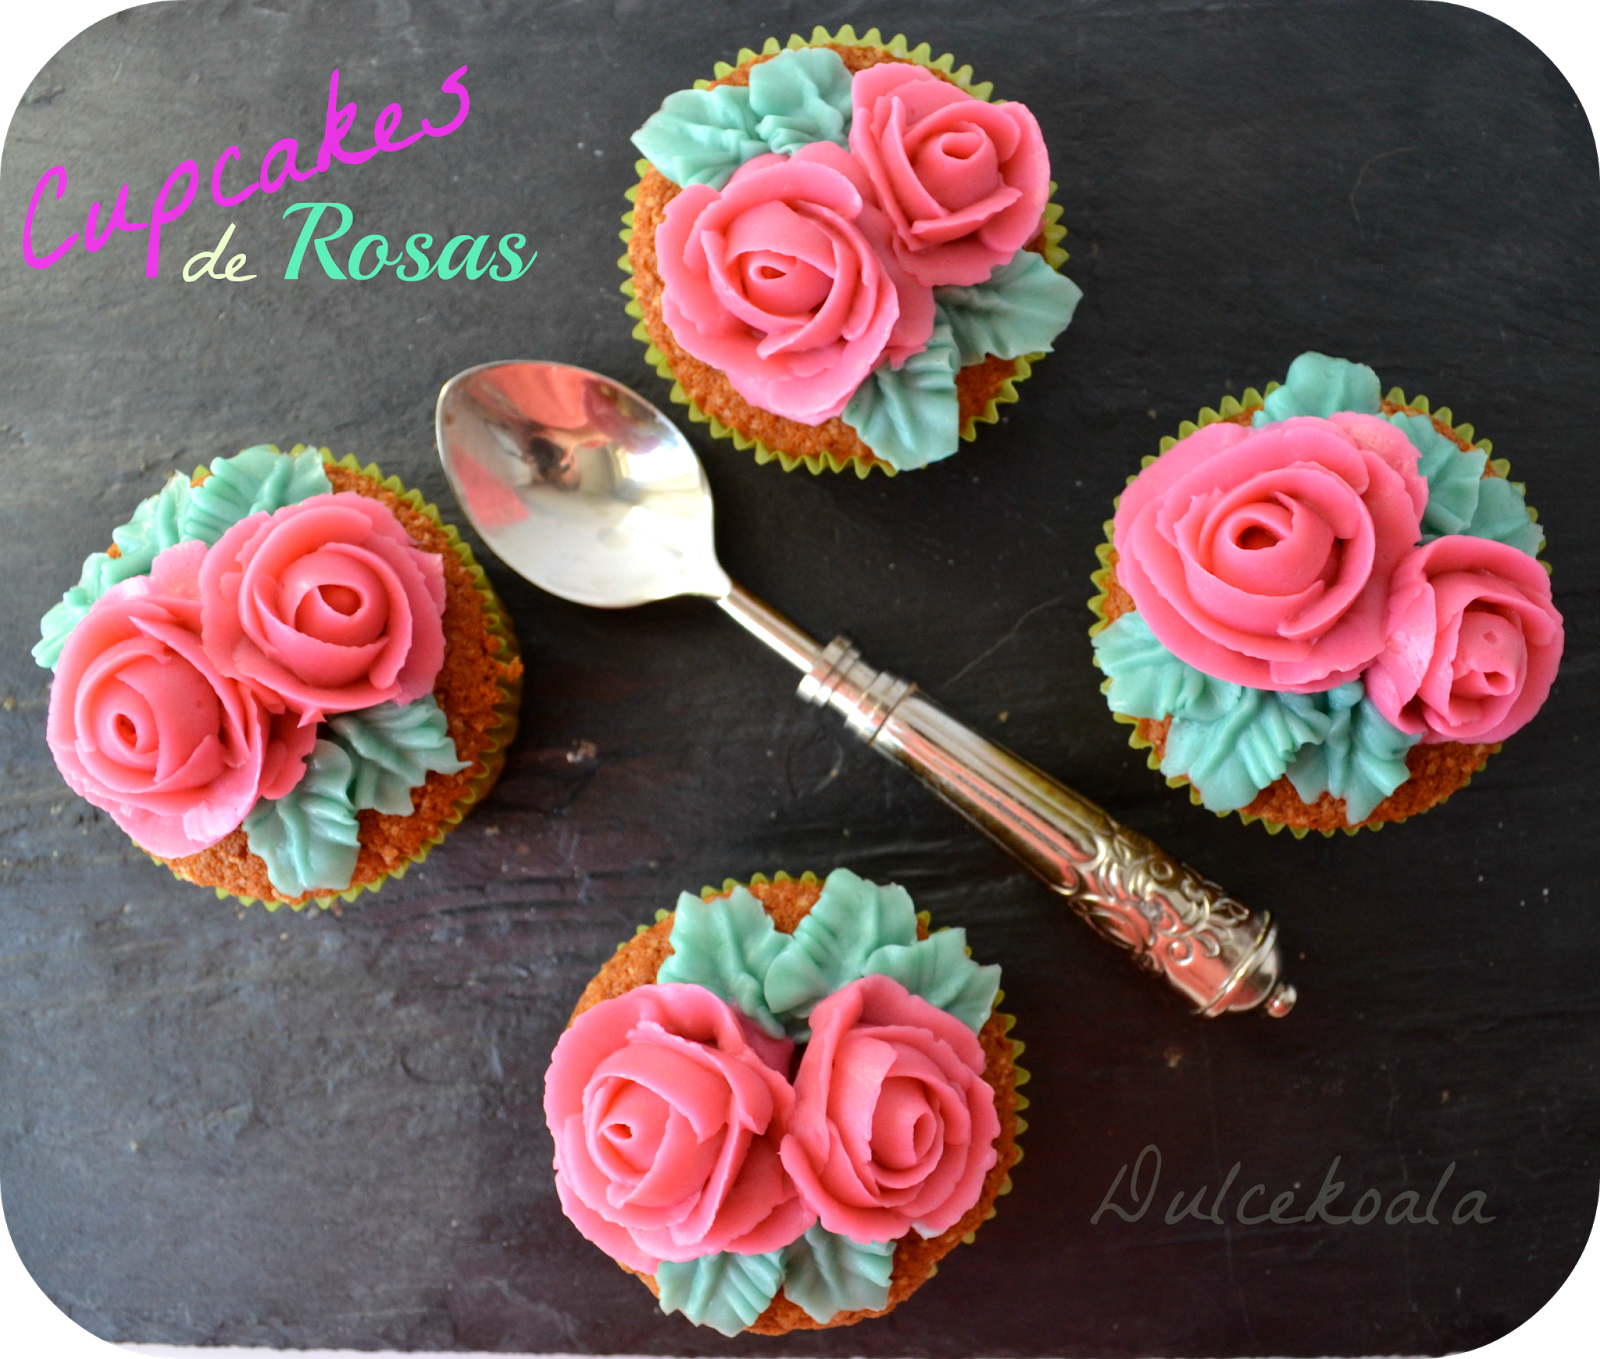 http://dulcekoala.blogspot.com.es/2014/03/cupcakes-de-rosas.html